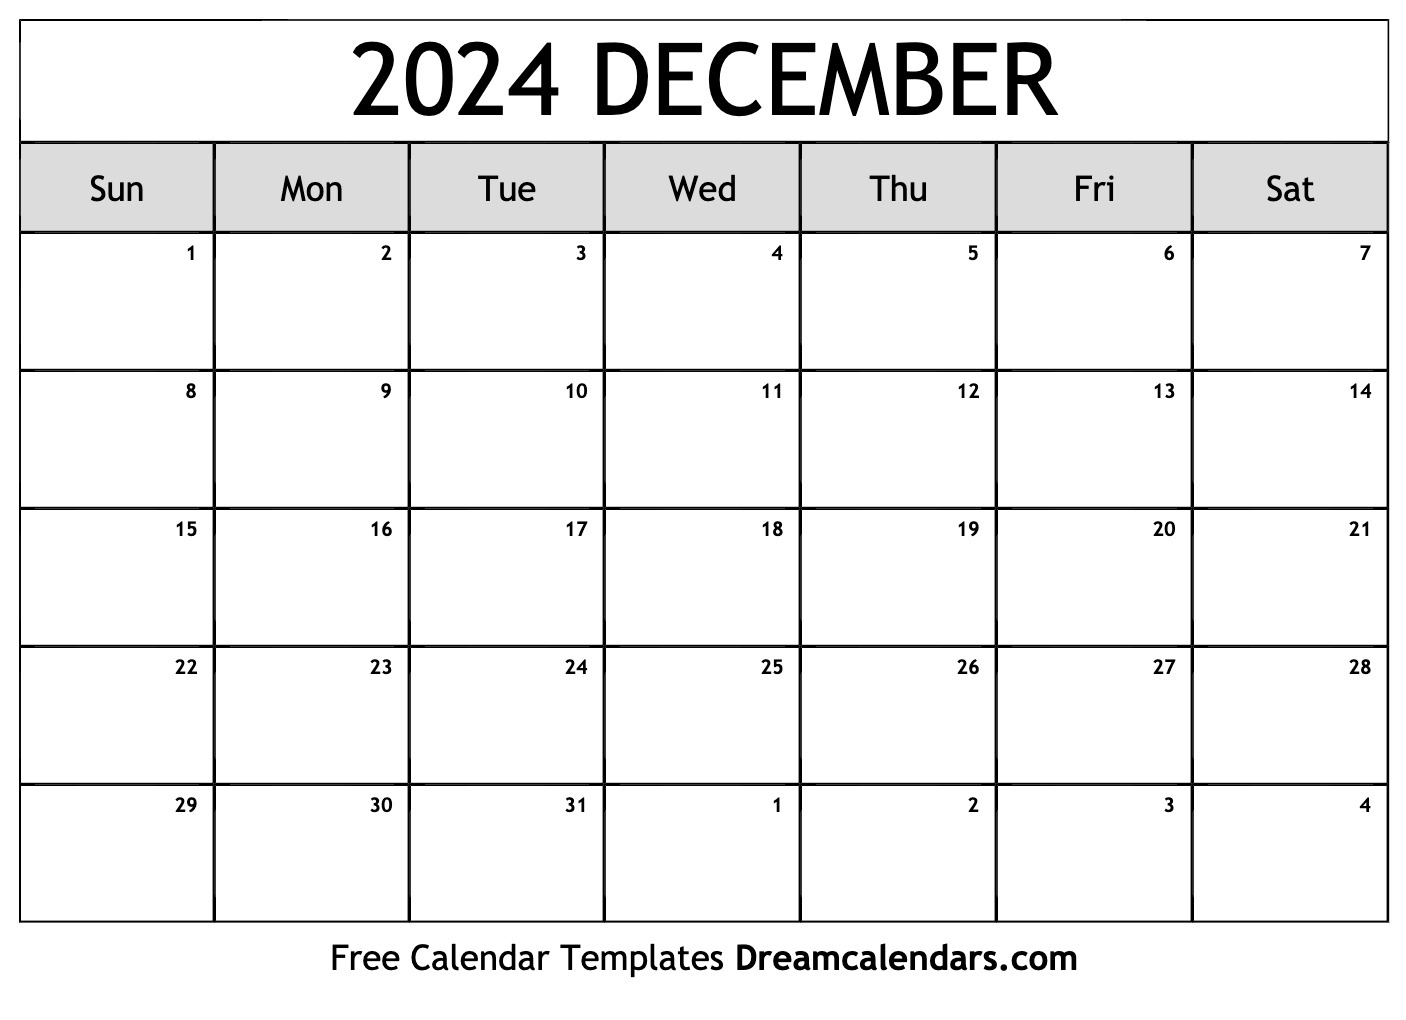 December 2024 Calendar | Free Blank Printable With Holidays | Printable Calendar Dec 2024